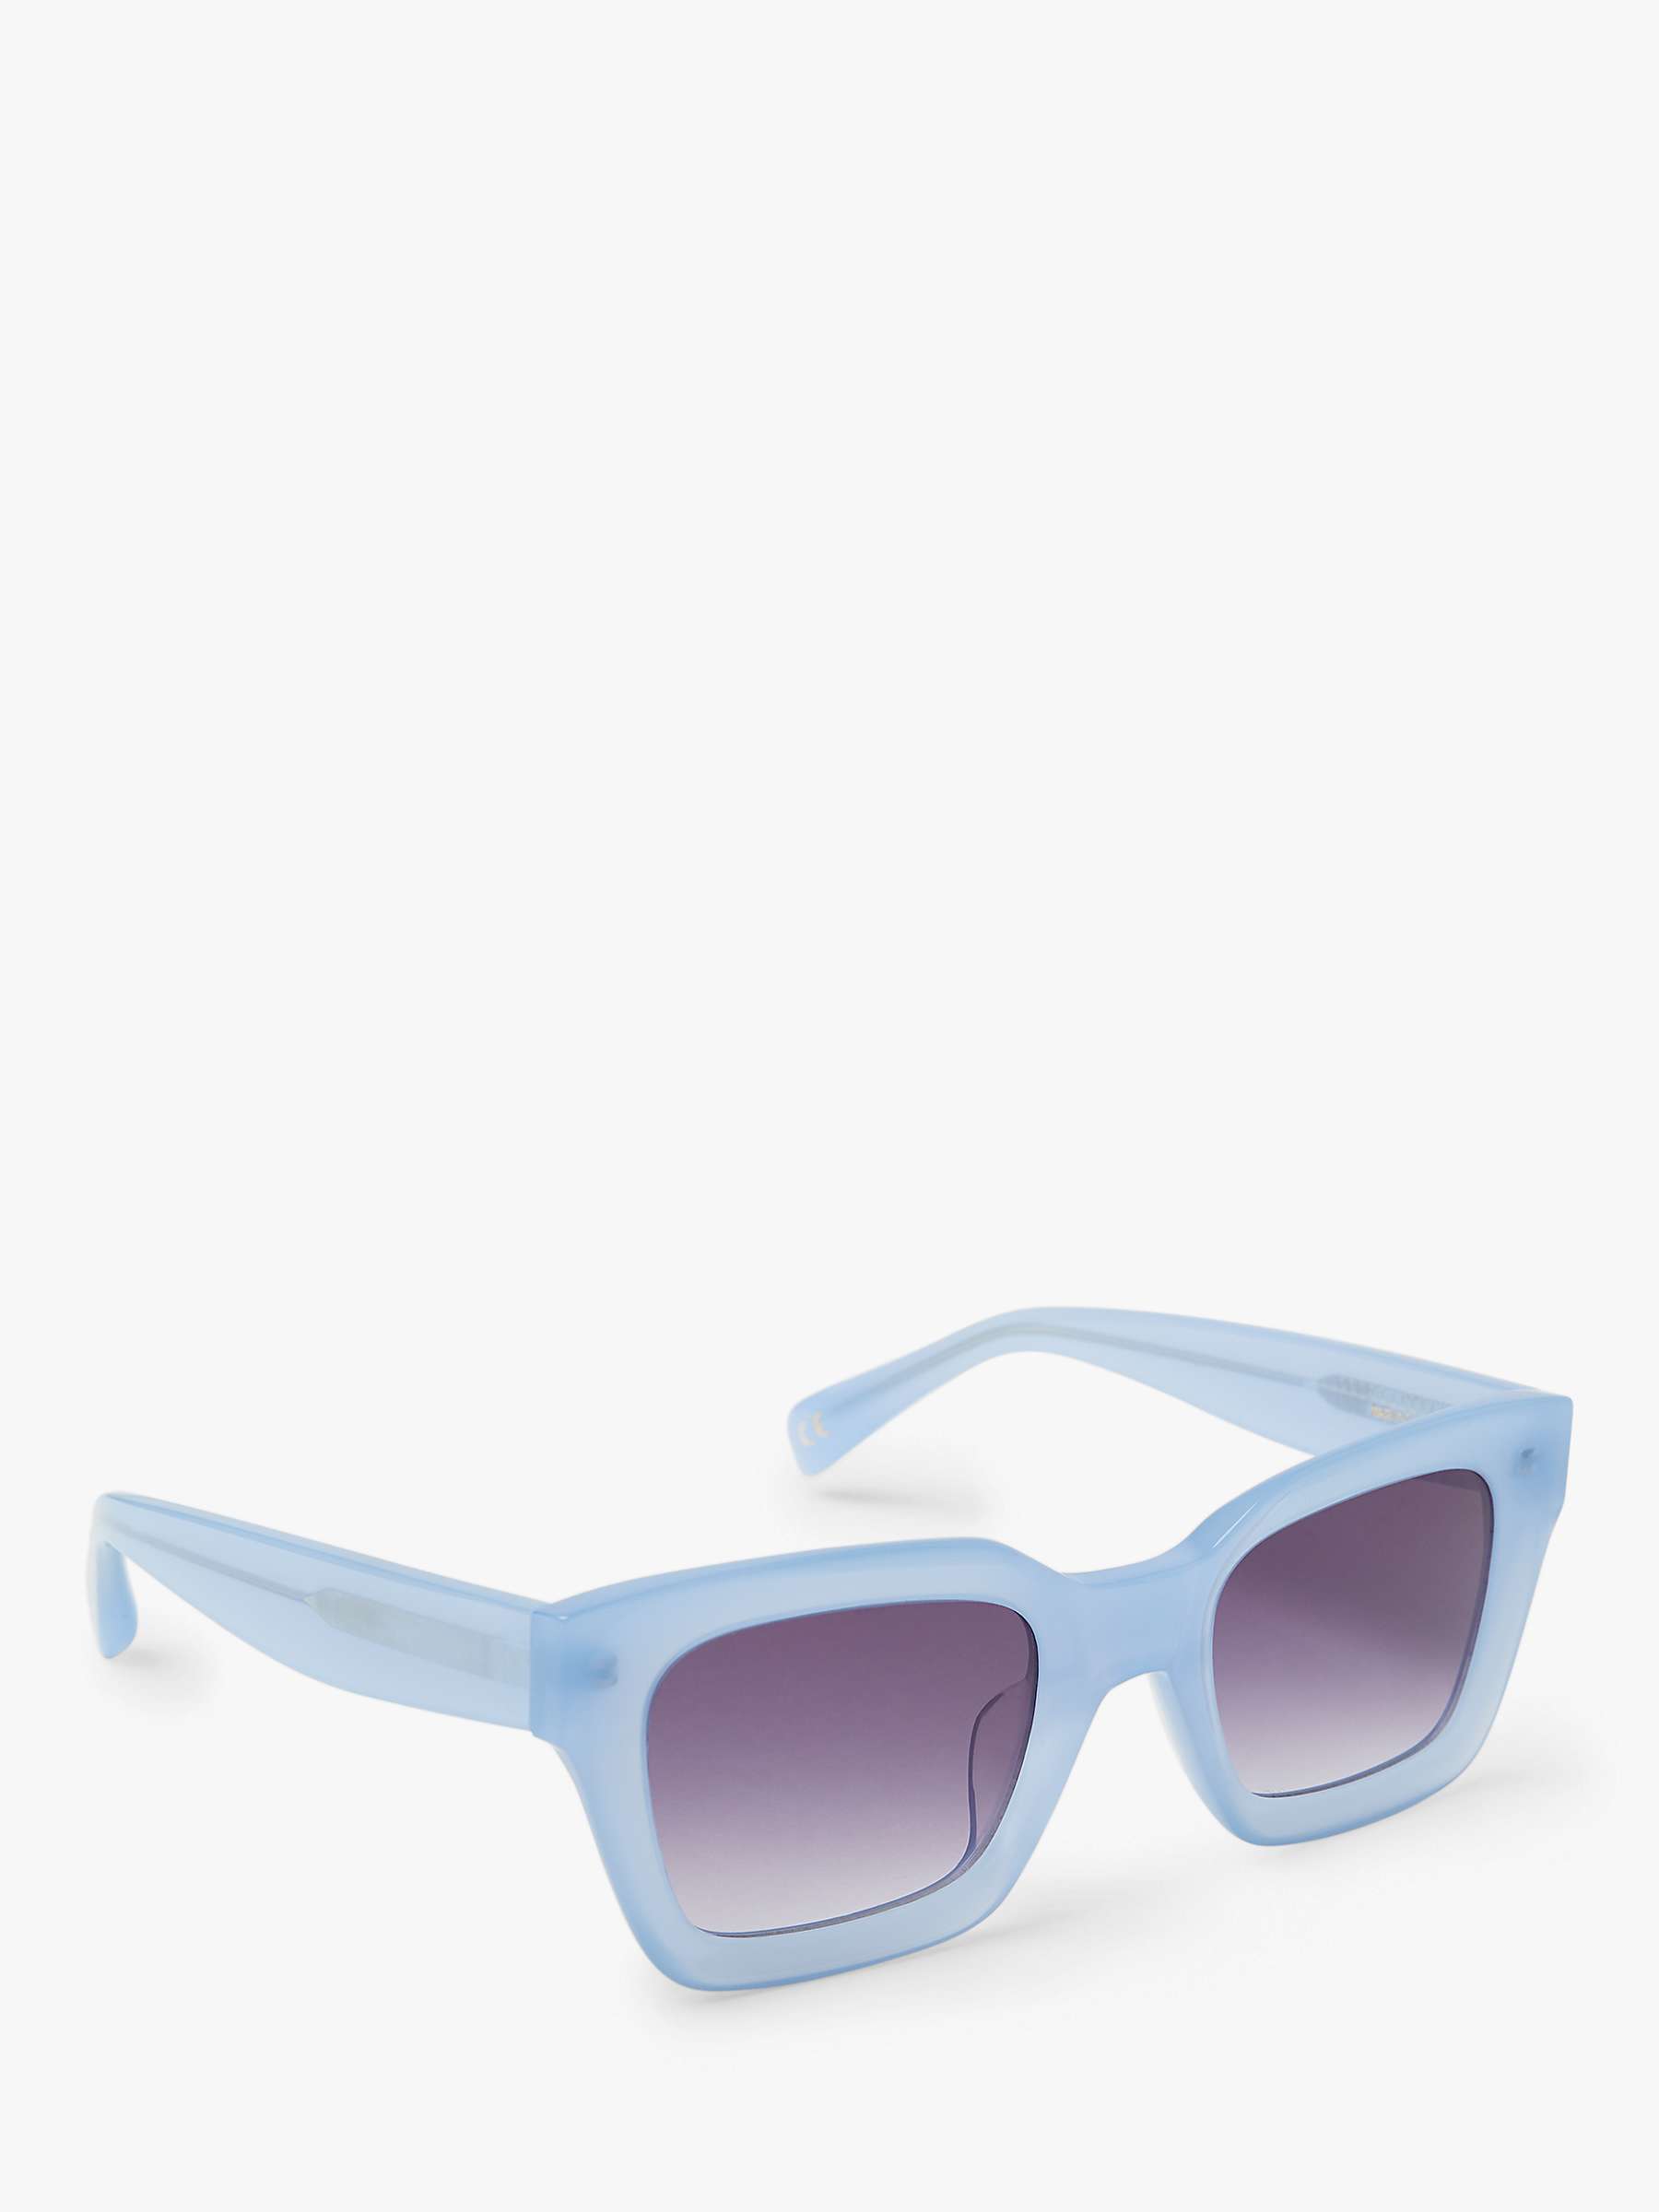 Buy Boden Women's Eze D-Frame Sunglasses Online at johnlewis.com